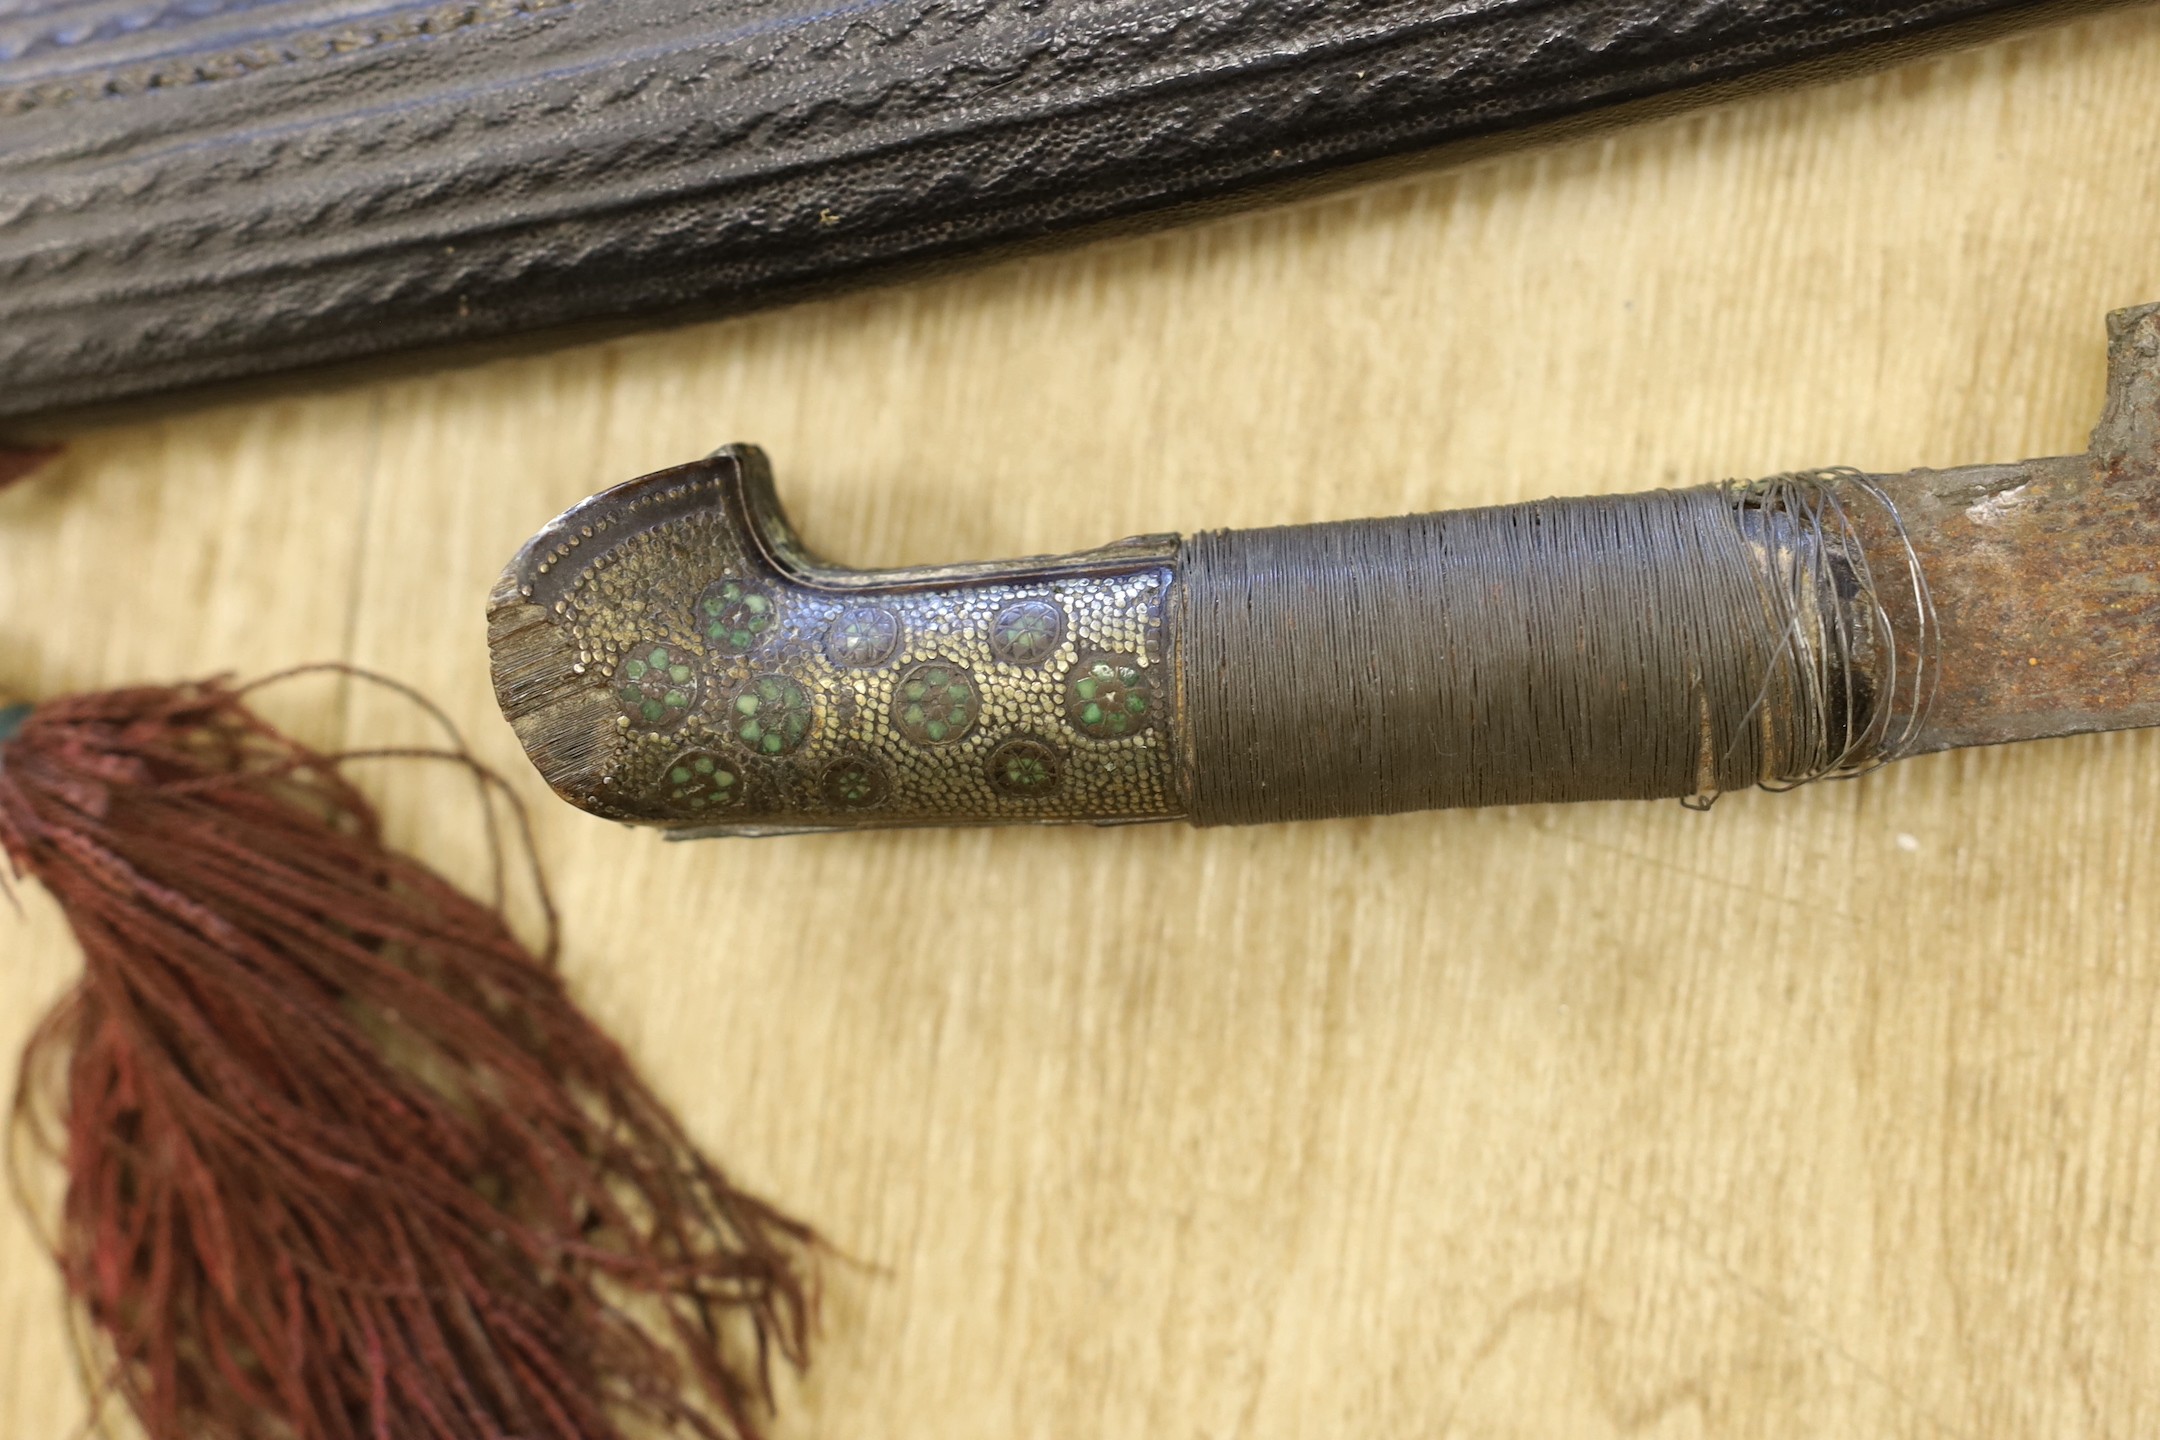 A 19th century Ottoman Short sword (yatagan) - 86cm long